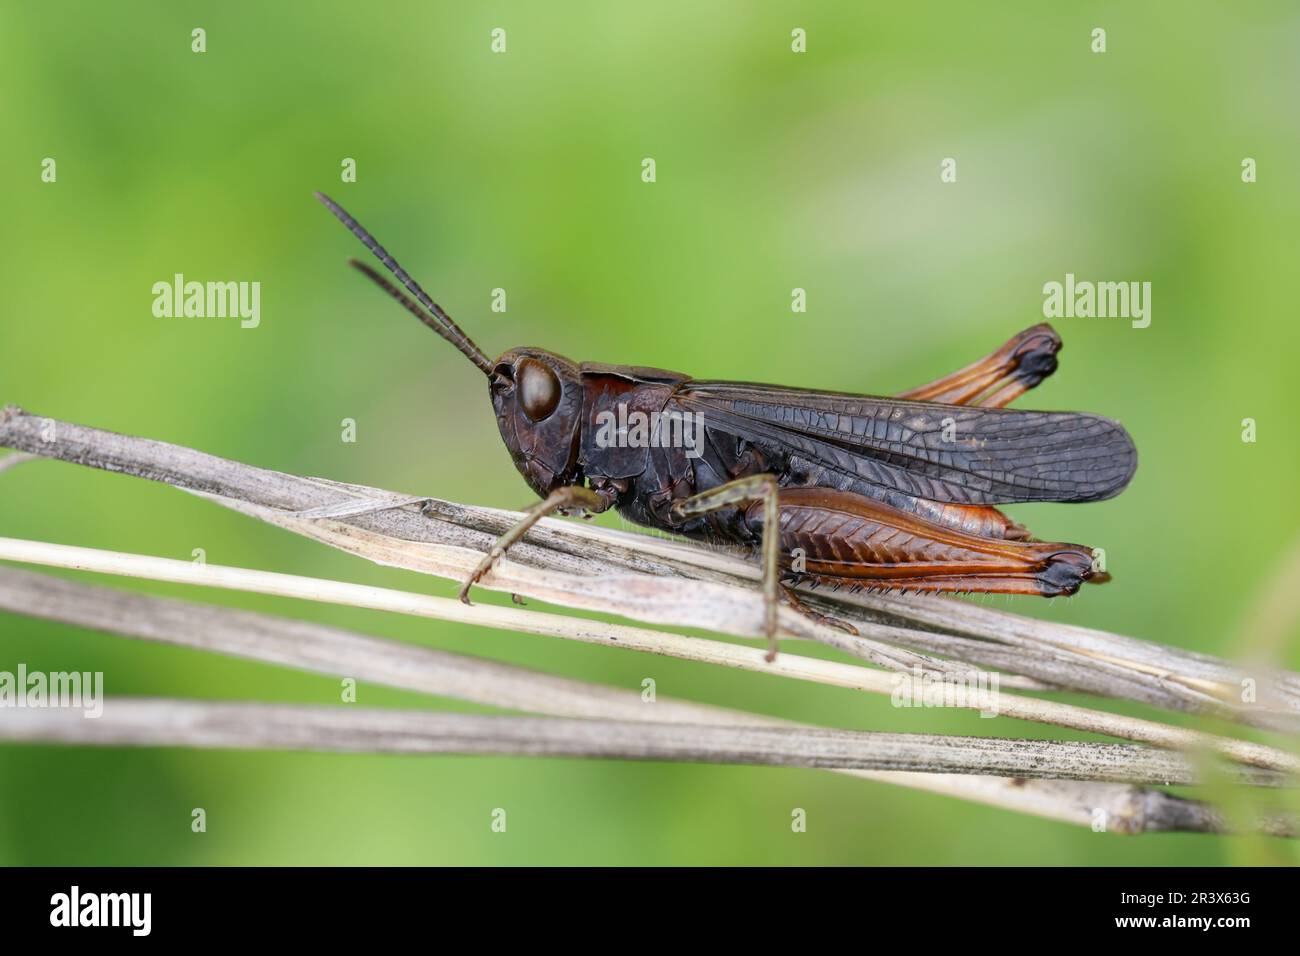 Buntbäuchiger Grashüpfer, Omocestus rufipes, Omocestus ventralis, woodland grasshopper,  le criquet noir ébène Stock Photo